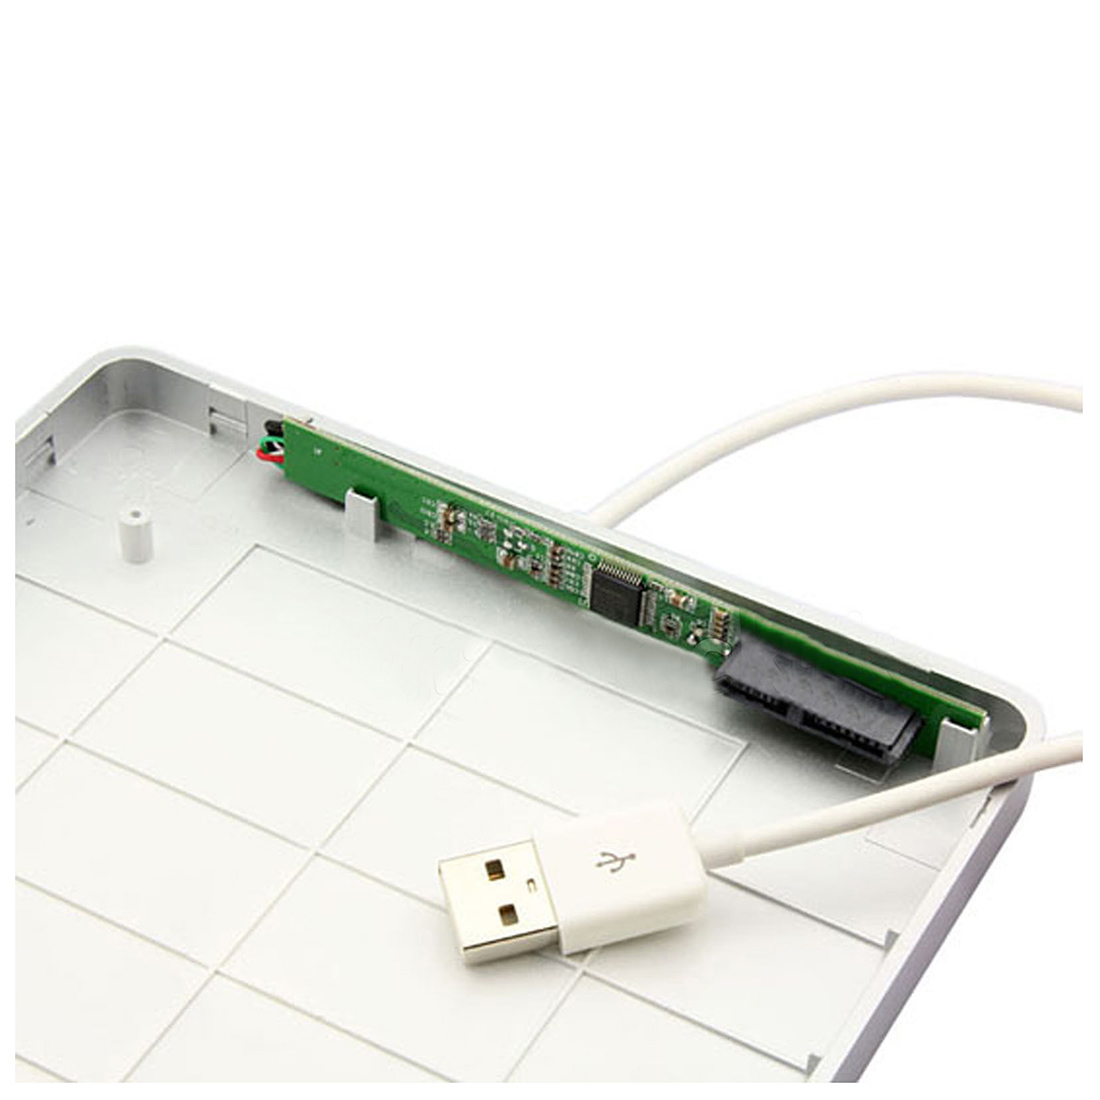 Slot-in USB SATA External CD DVD/RW Drive Enclosure Caddy Case For Apple MacBook